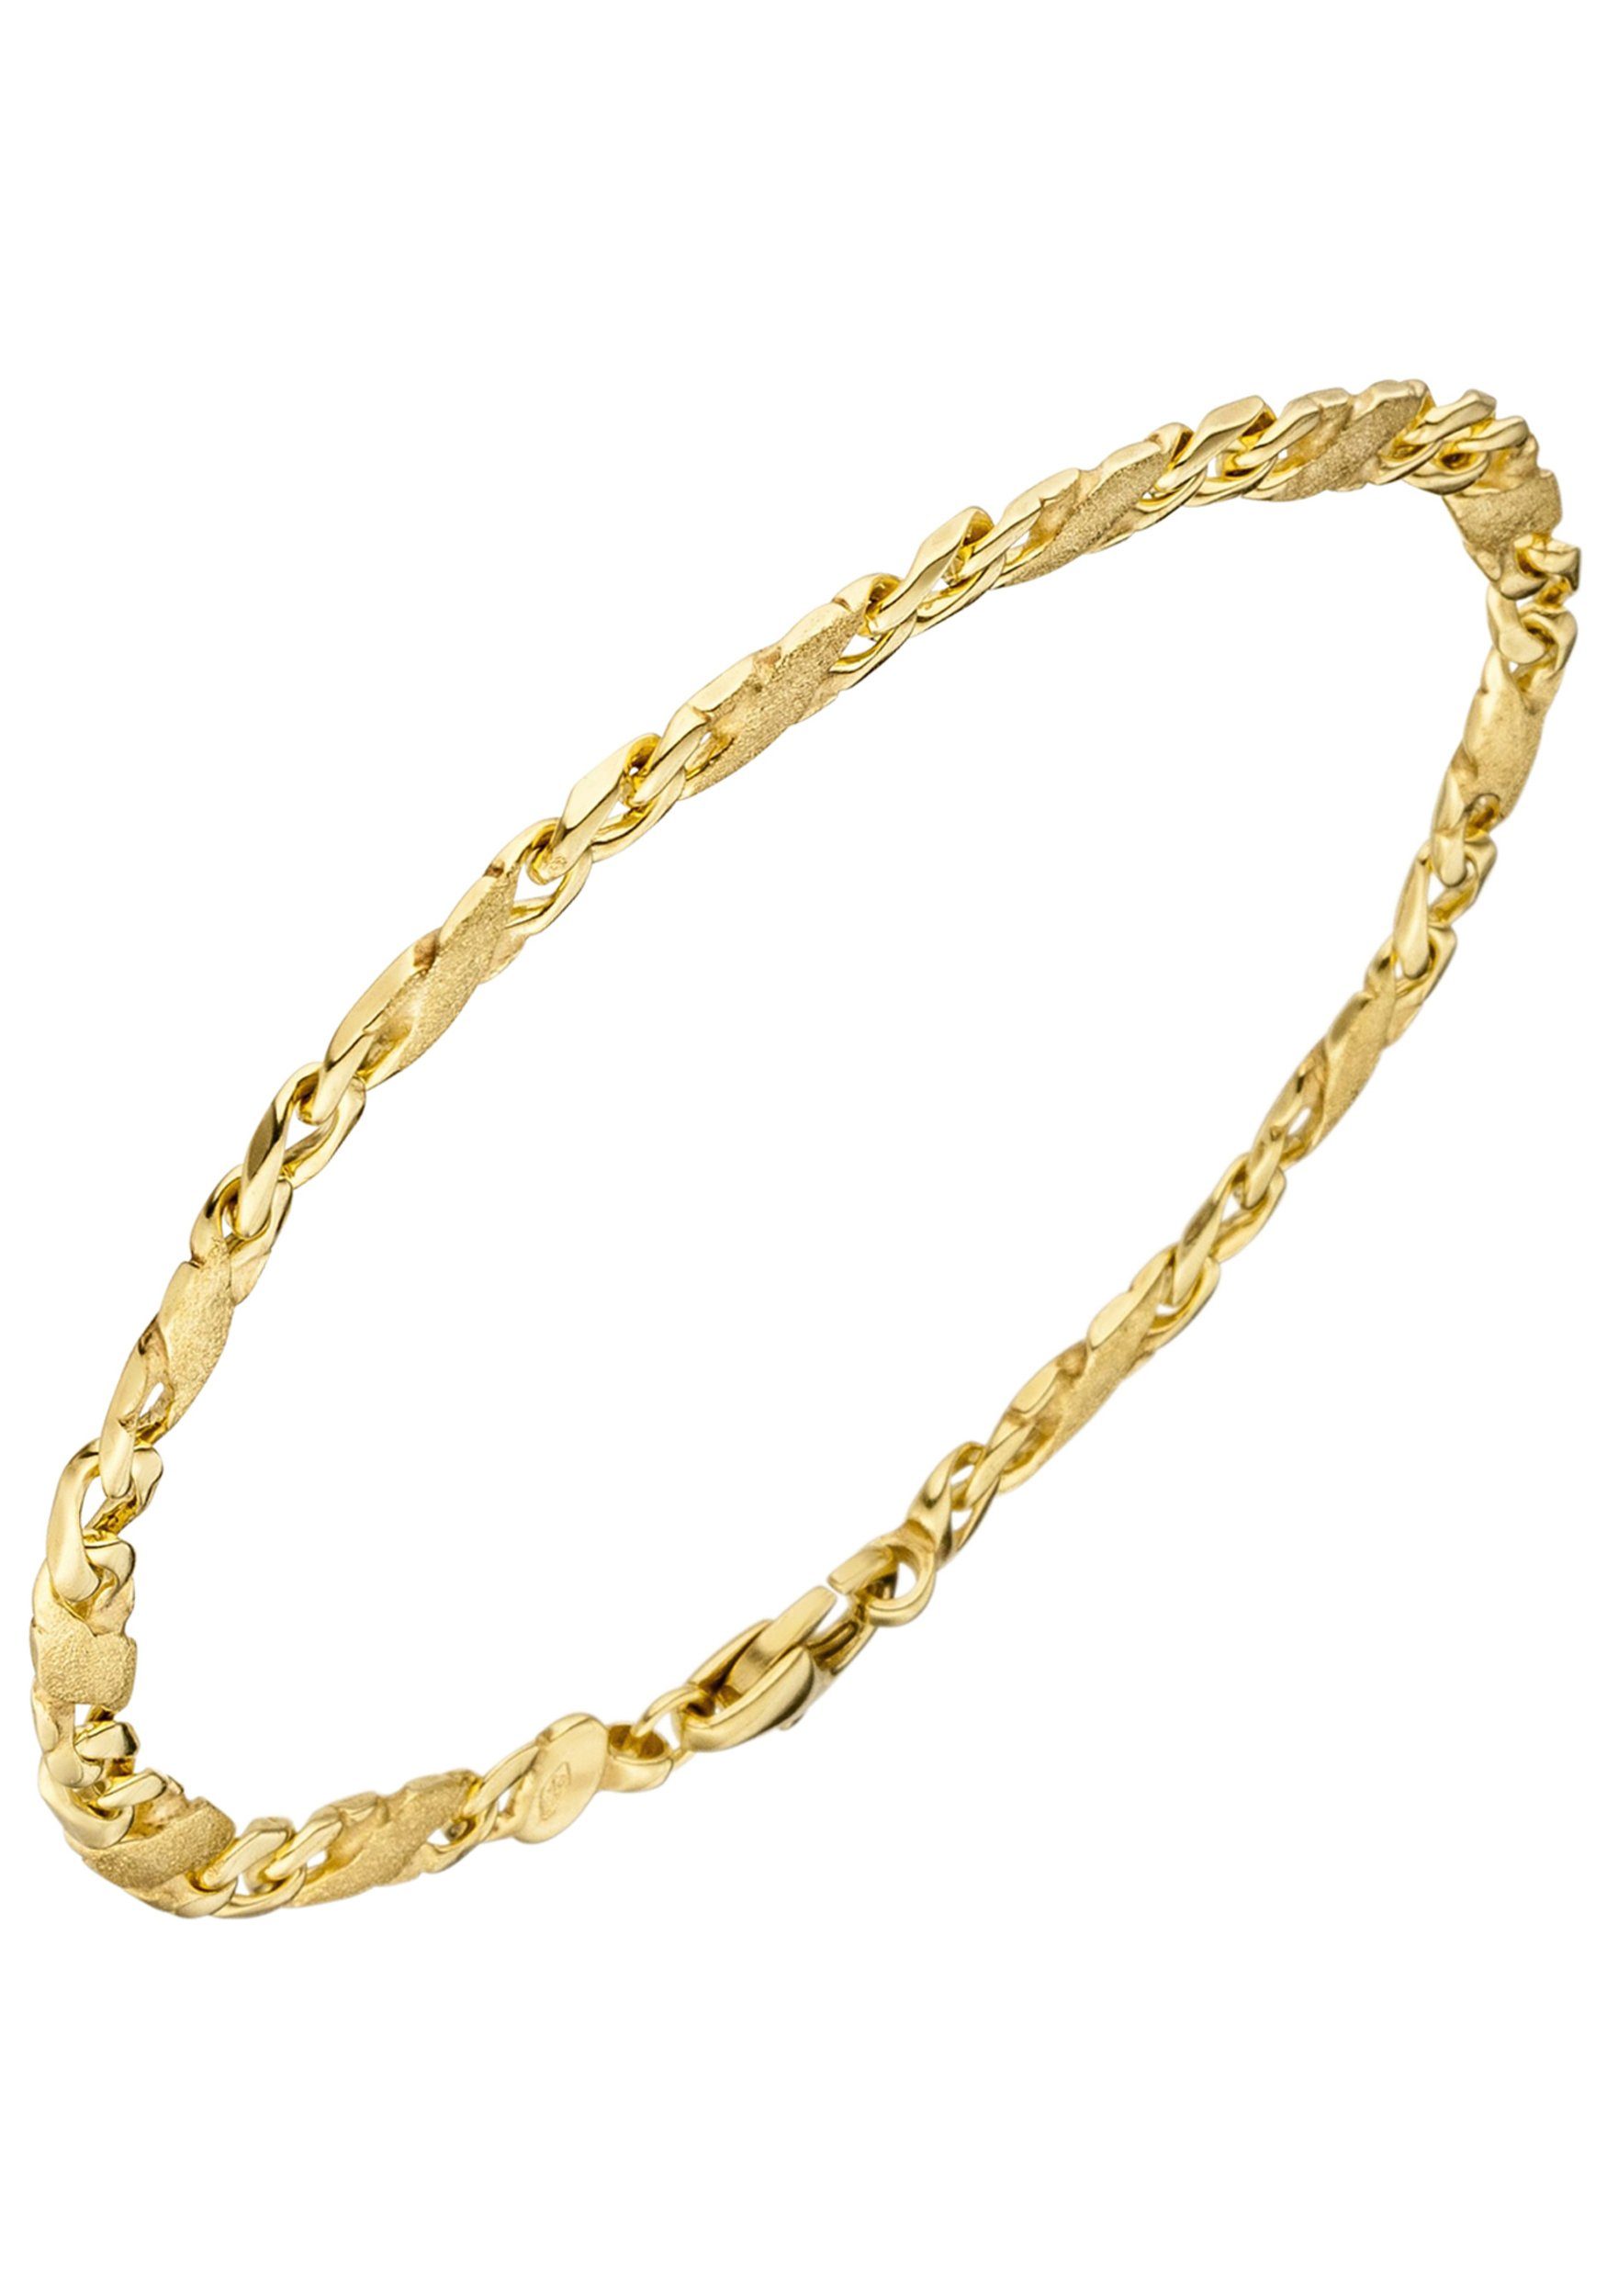 JOBO Goldarmband, 585 Gold 21 cm, Länge ca. 21 cm, Stärke ca. 4,4 mm x 1,8  mm